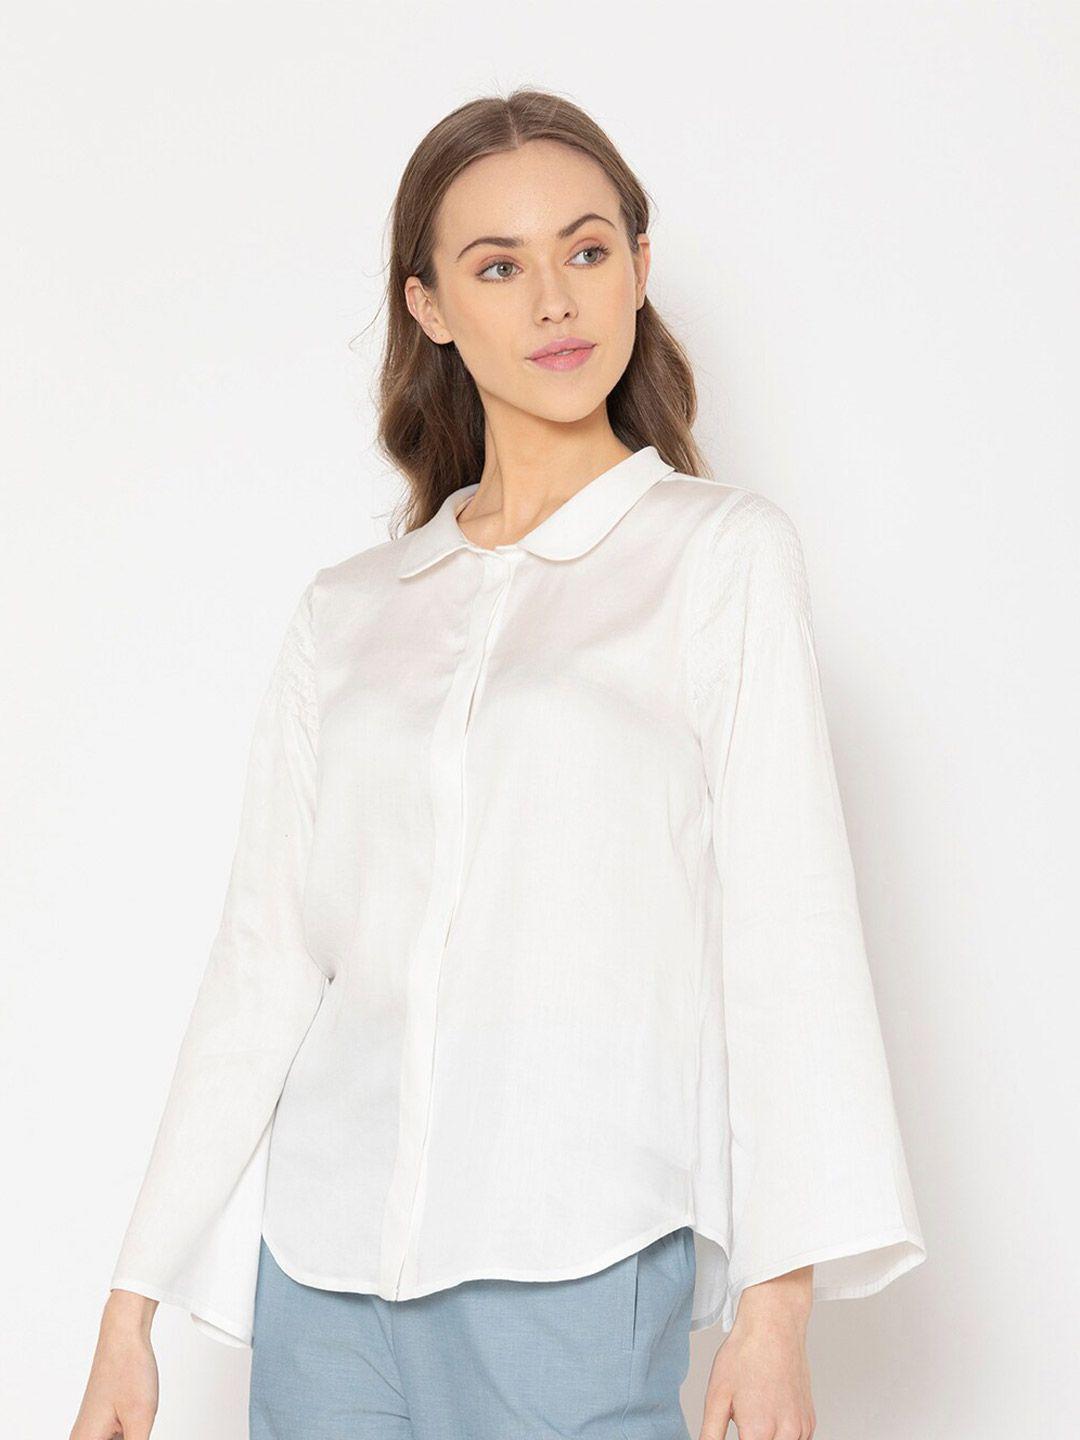 shaye-women-white-solid-shirt-style-top